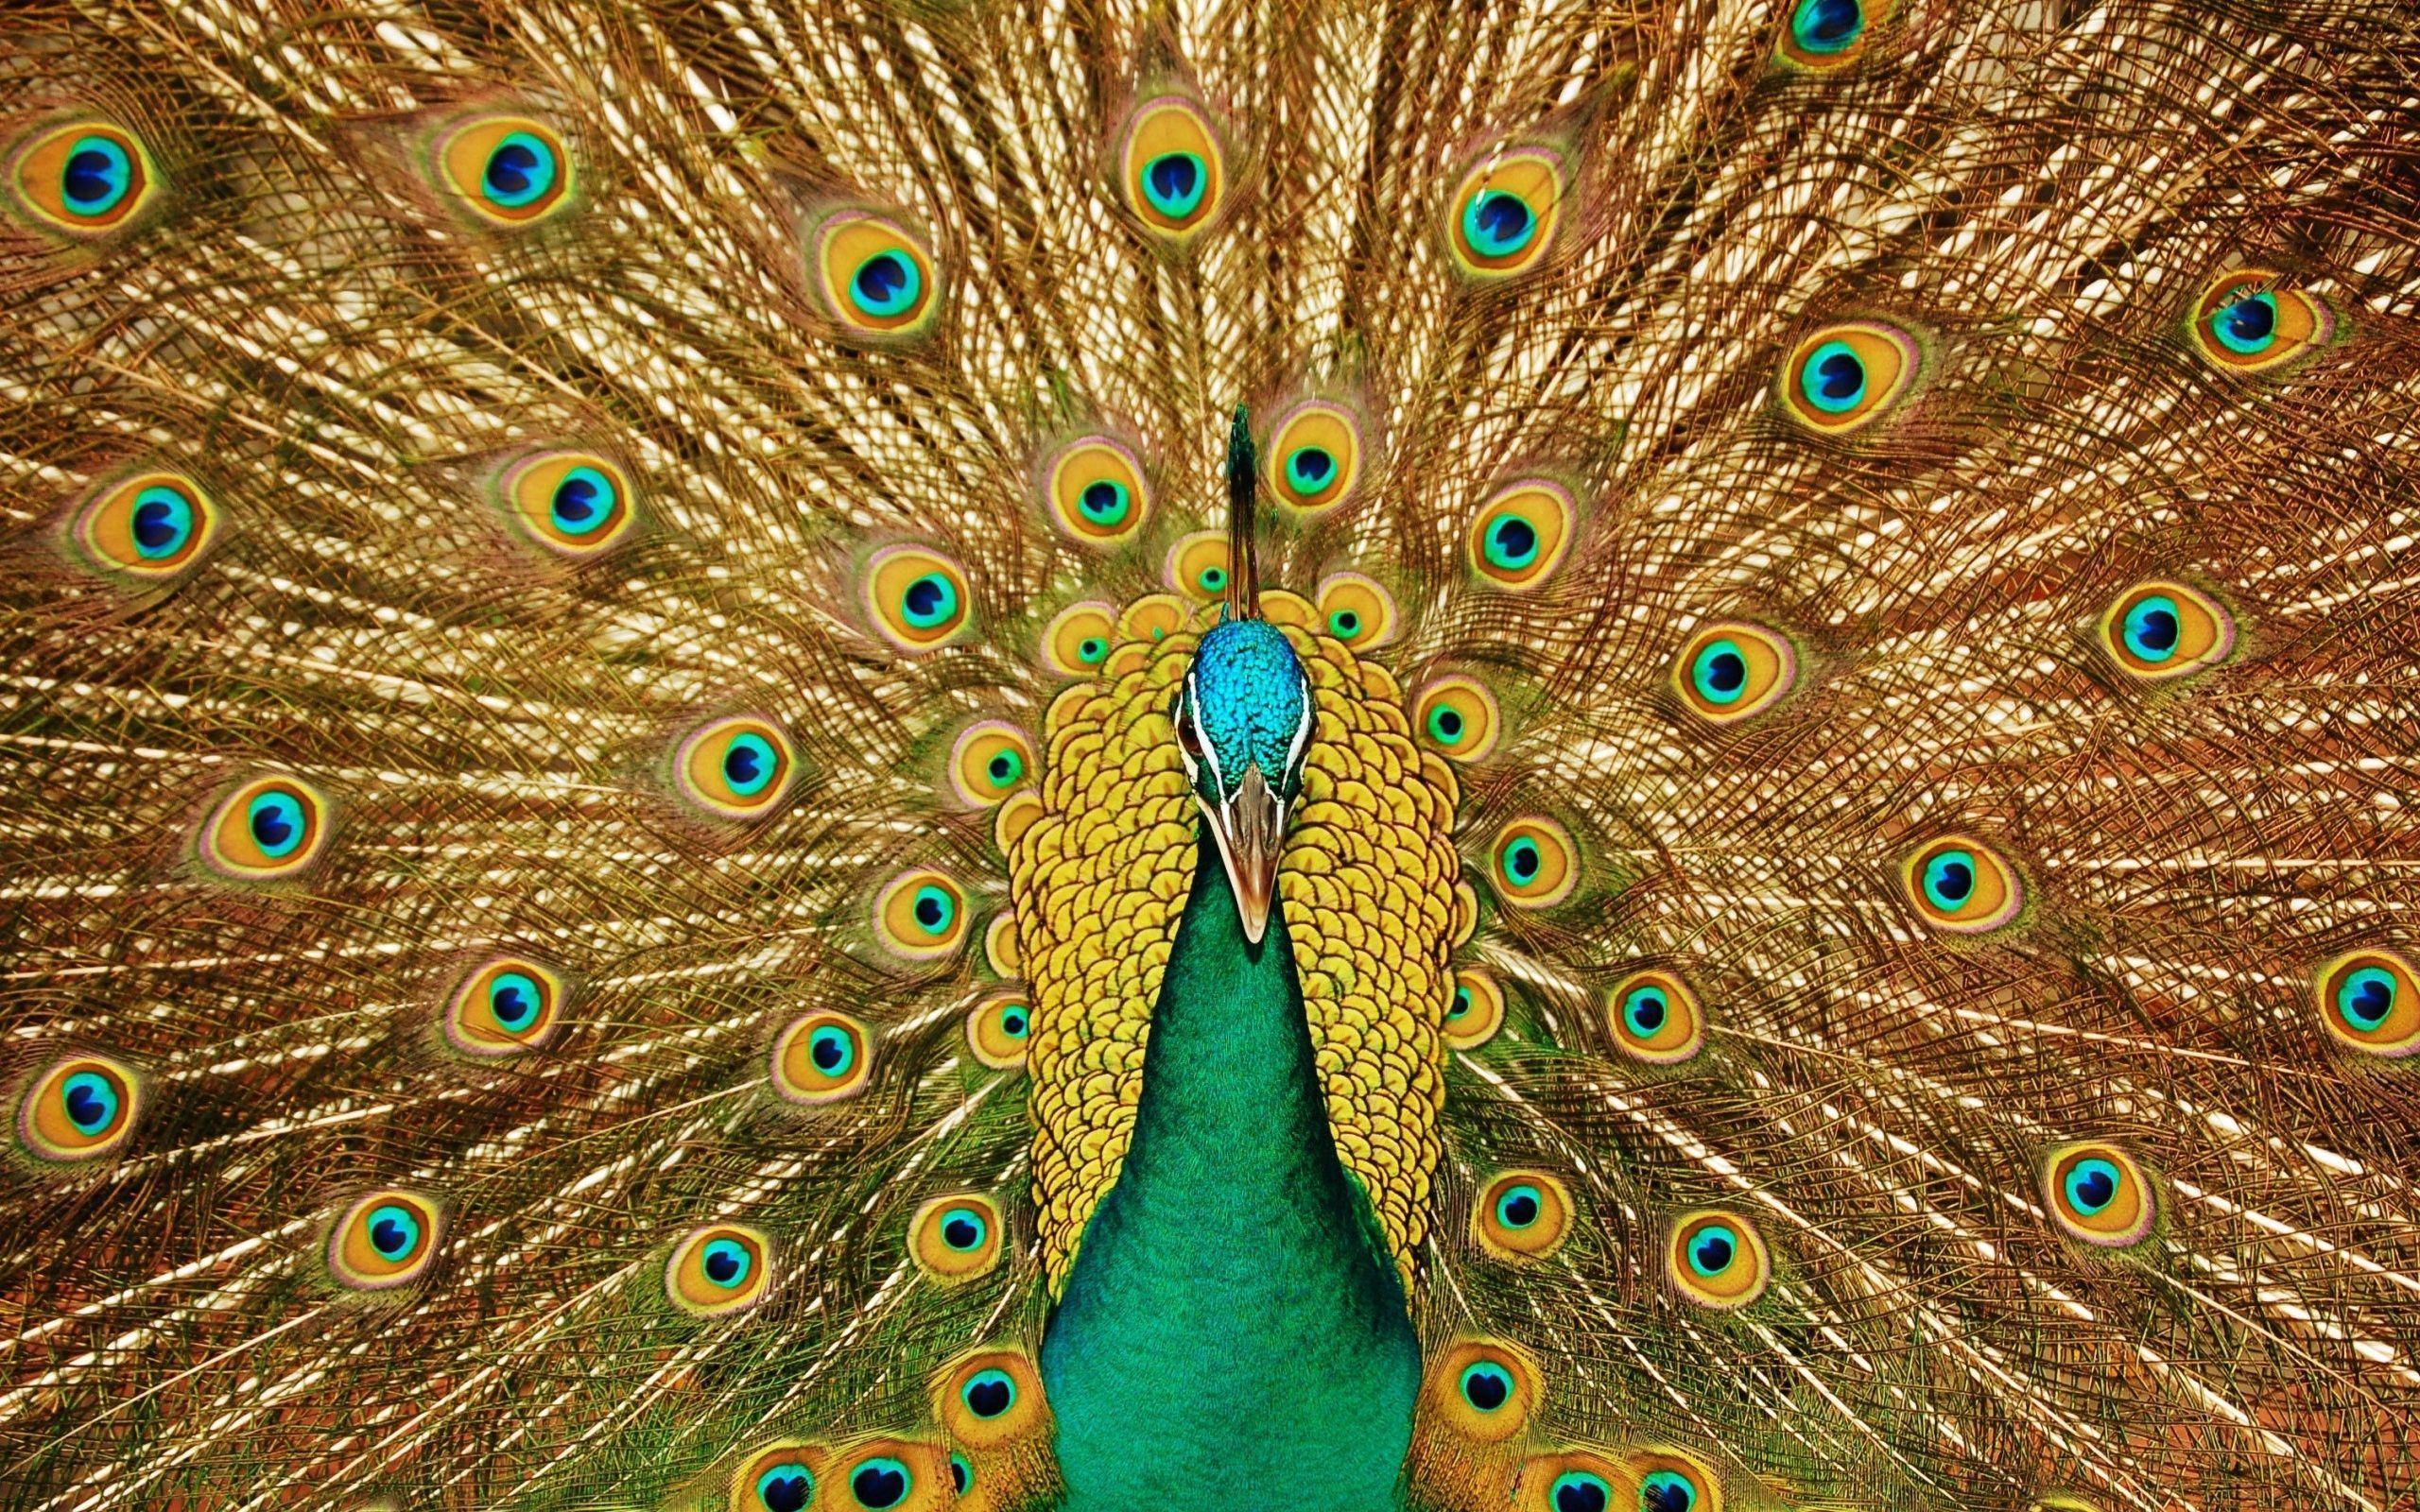 Desktop Peacock HD Wallpaper. Wallpaper, Background, Image